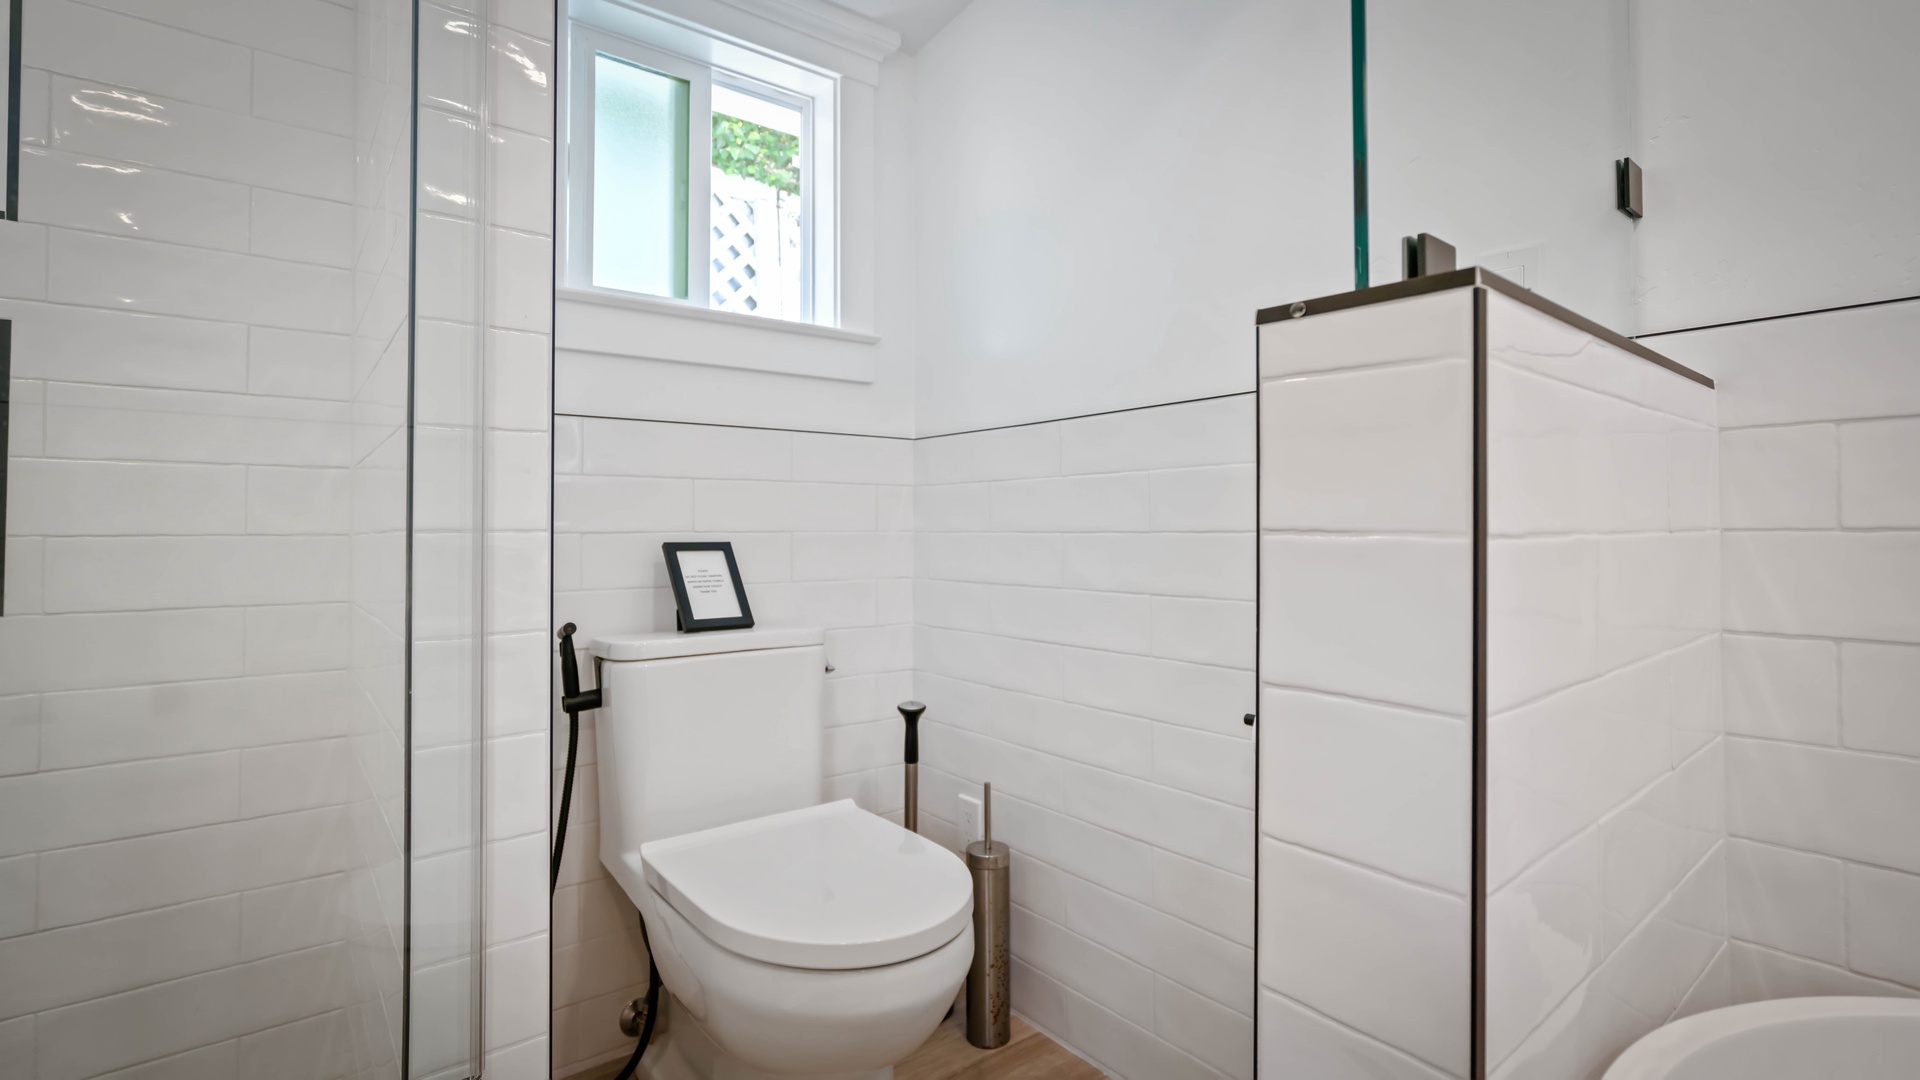 Primary ensuite bathroom with walk in shower, soaking tub and dual vanities